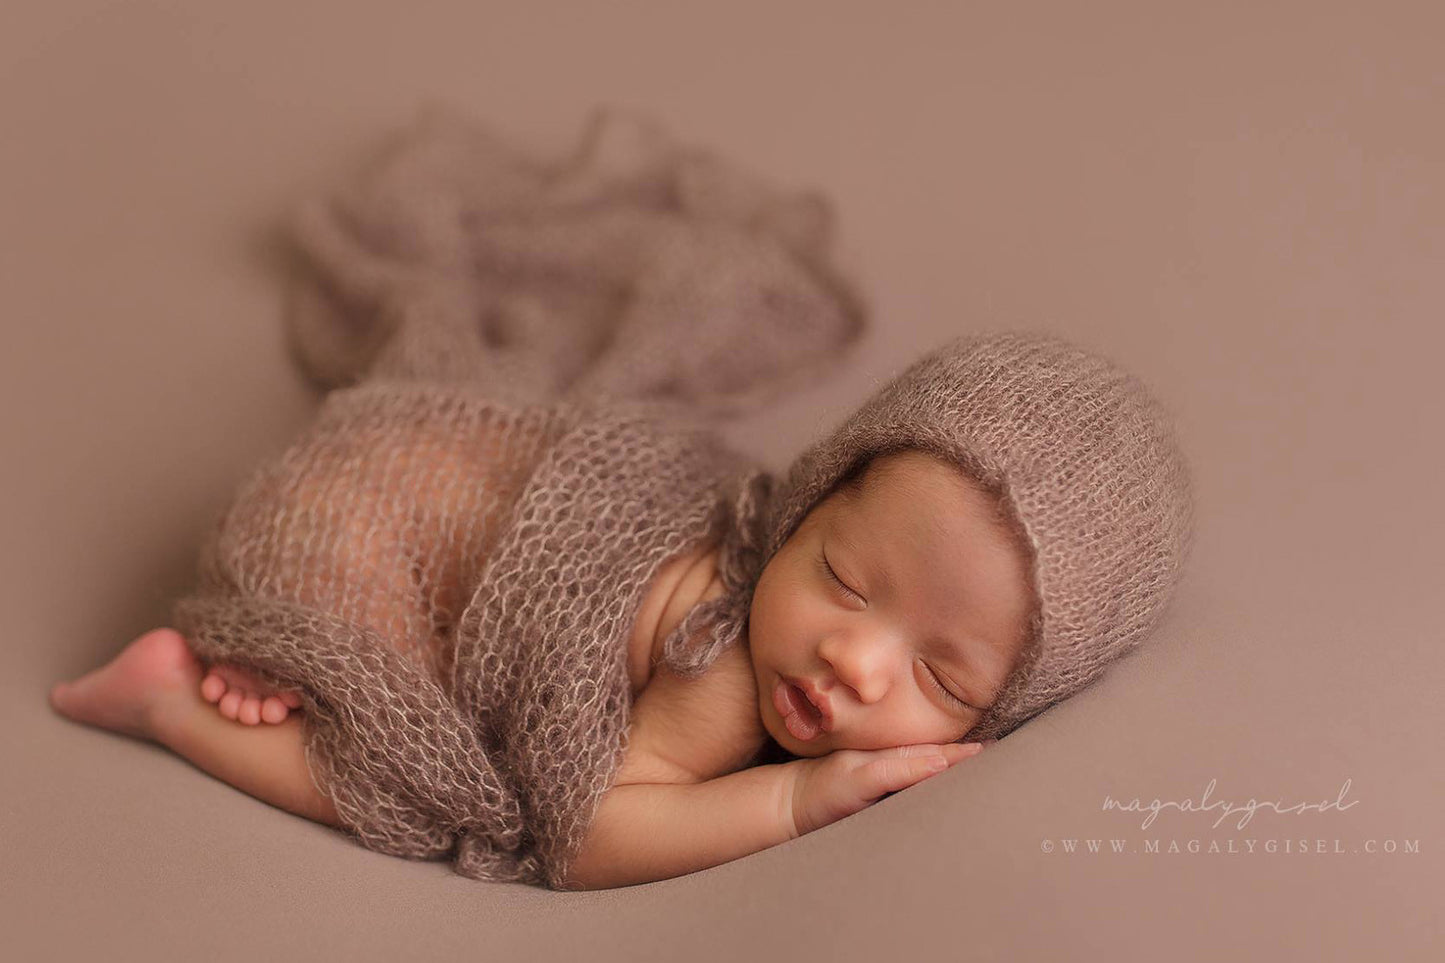 Sleeping newborn on a brown textured blanket, posed on a Posing Bean Bag